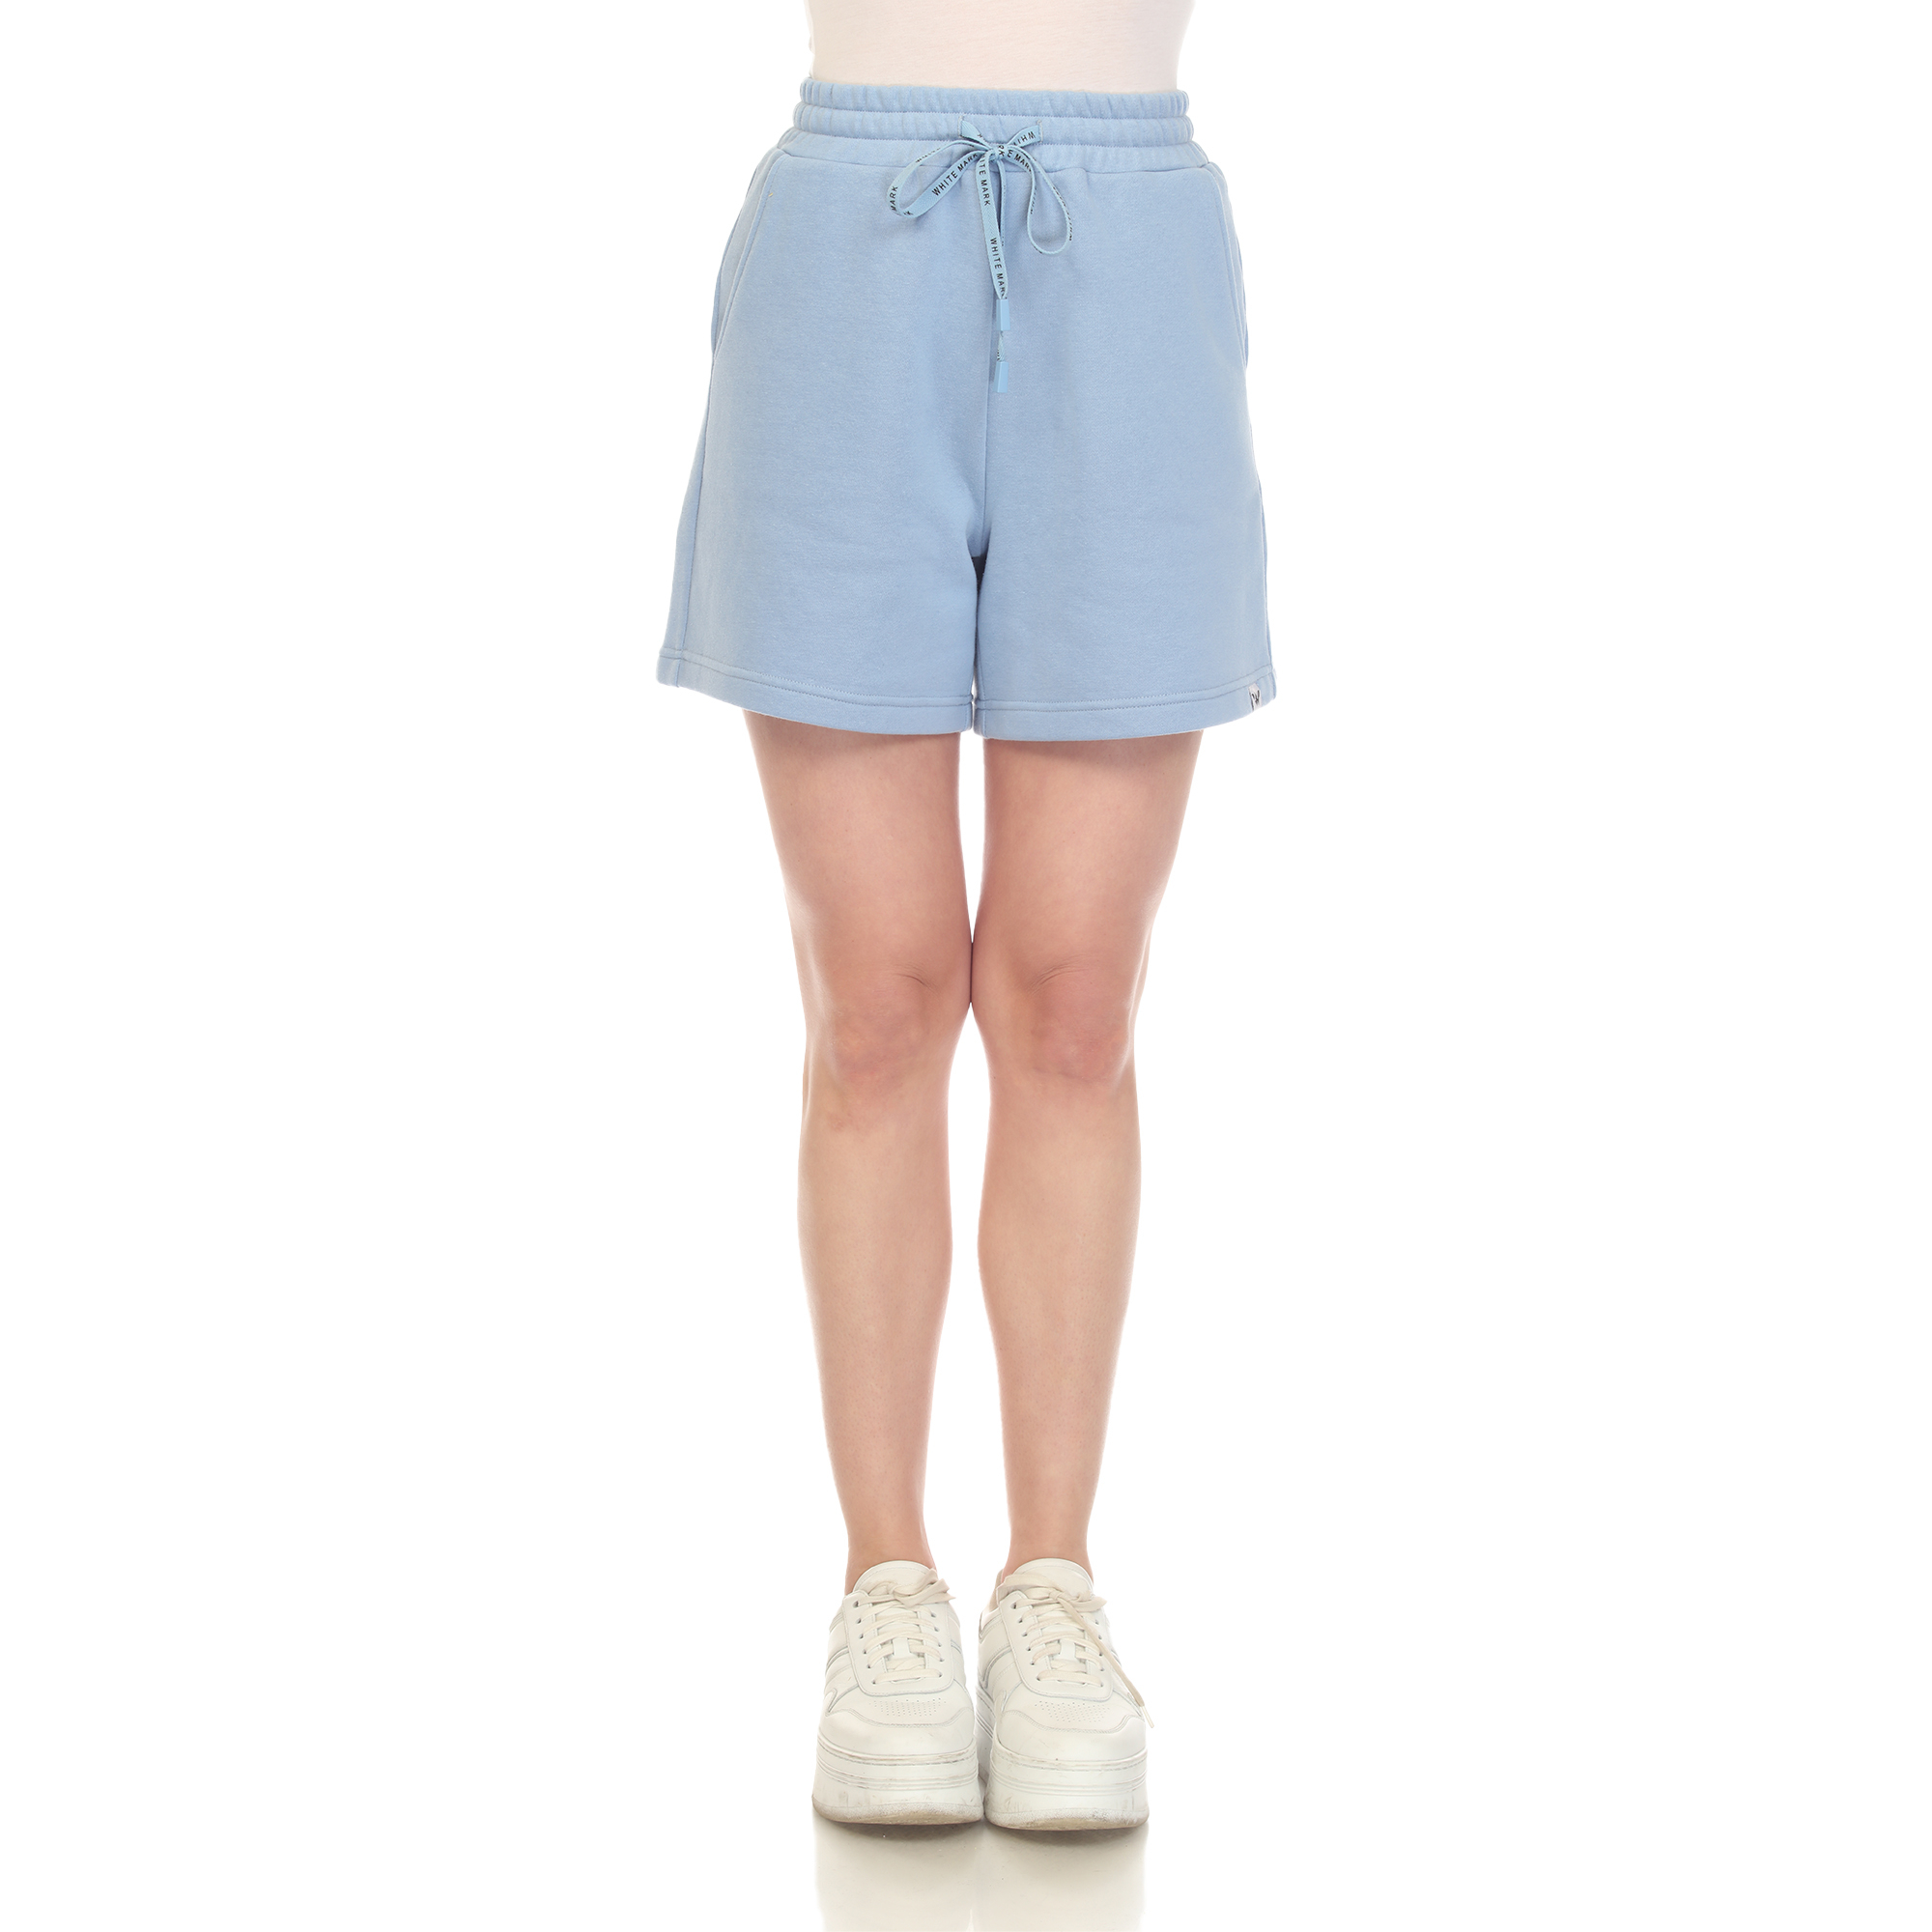 White Mark Women's Super Soft Drawstring Waistband Sweat Shorts - Denim Blue, 3X